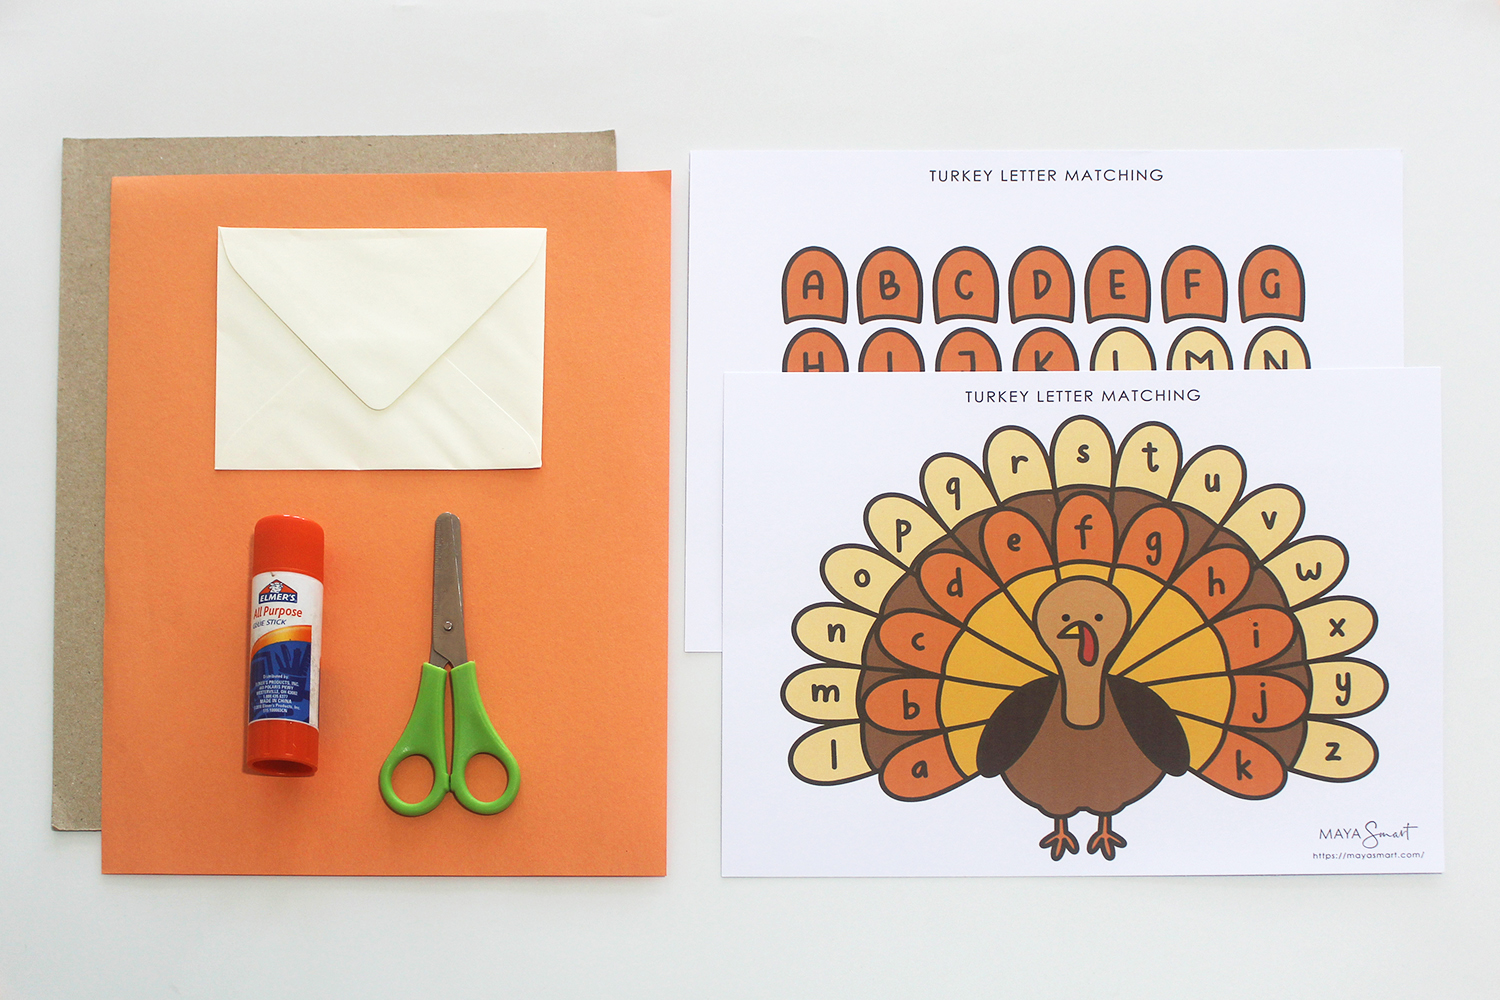 Construction paper, scissors, glue, envelope, turkey letter matching printable